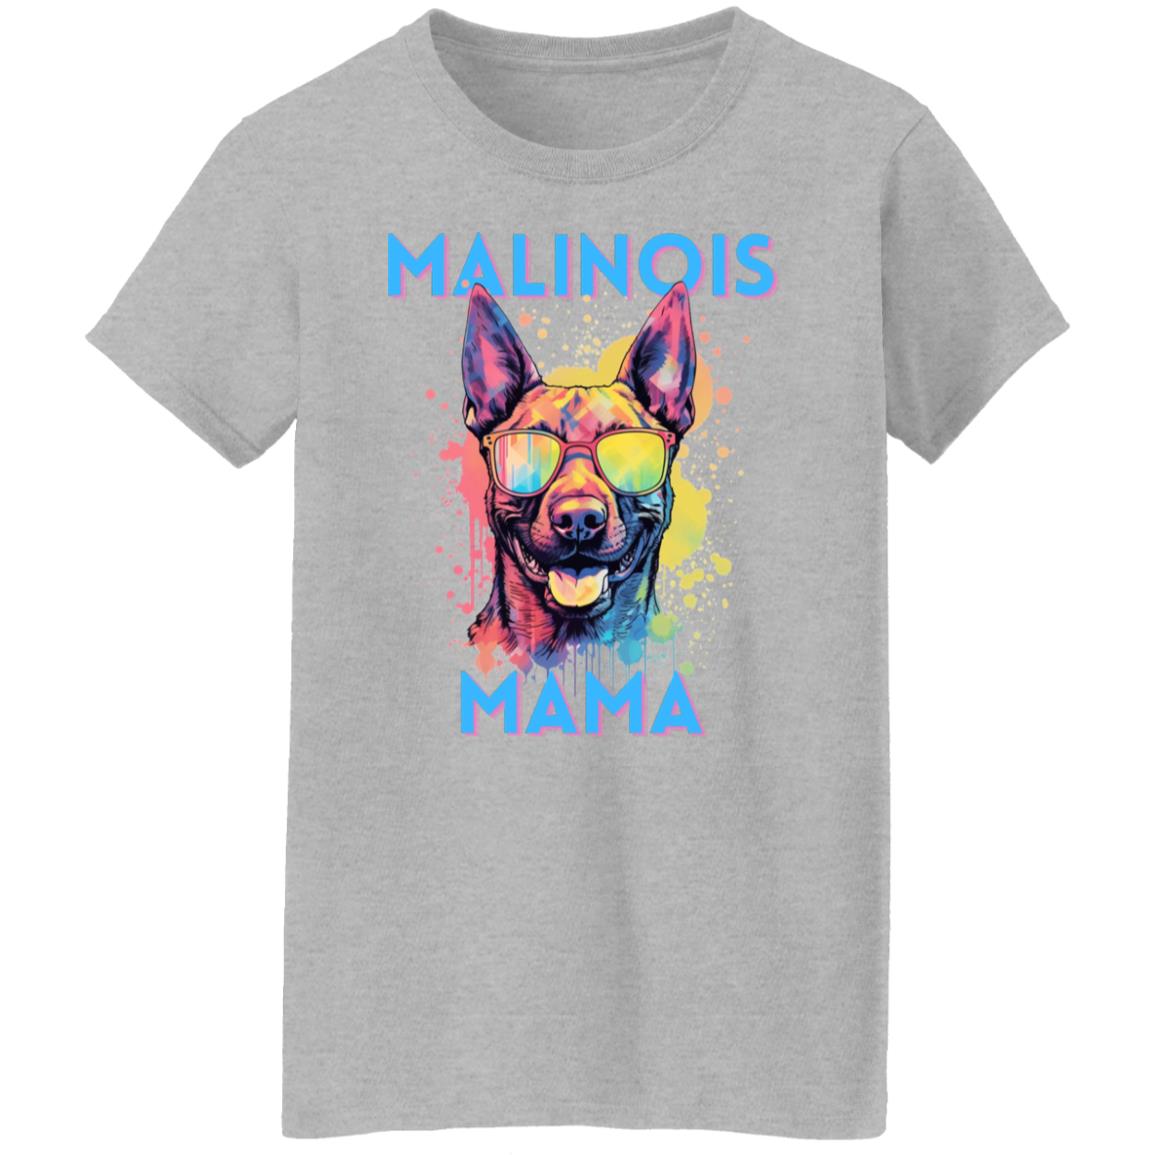 [Limited Supply] Malinois Mama Graphic Ladies'Tee